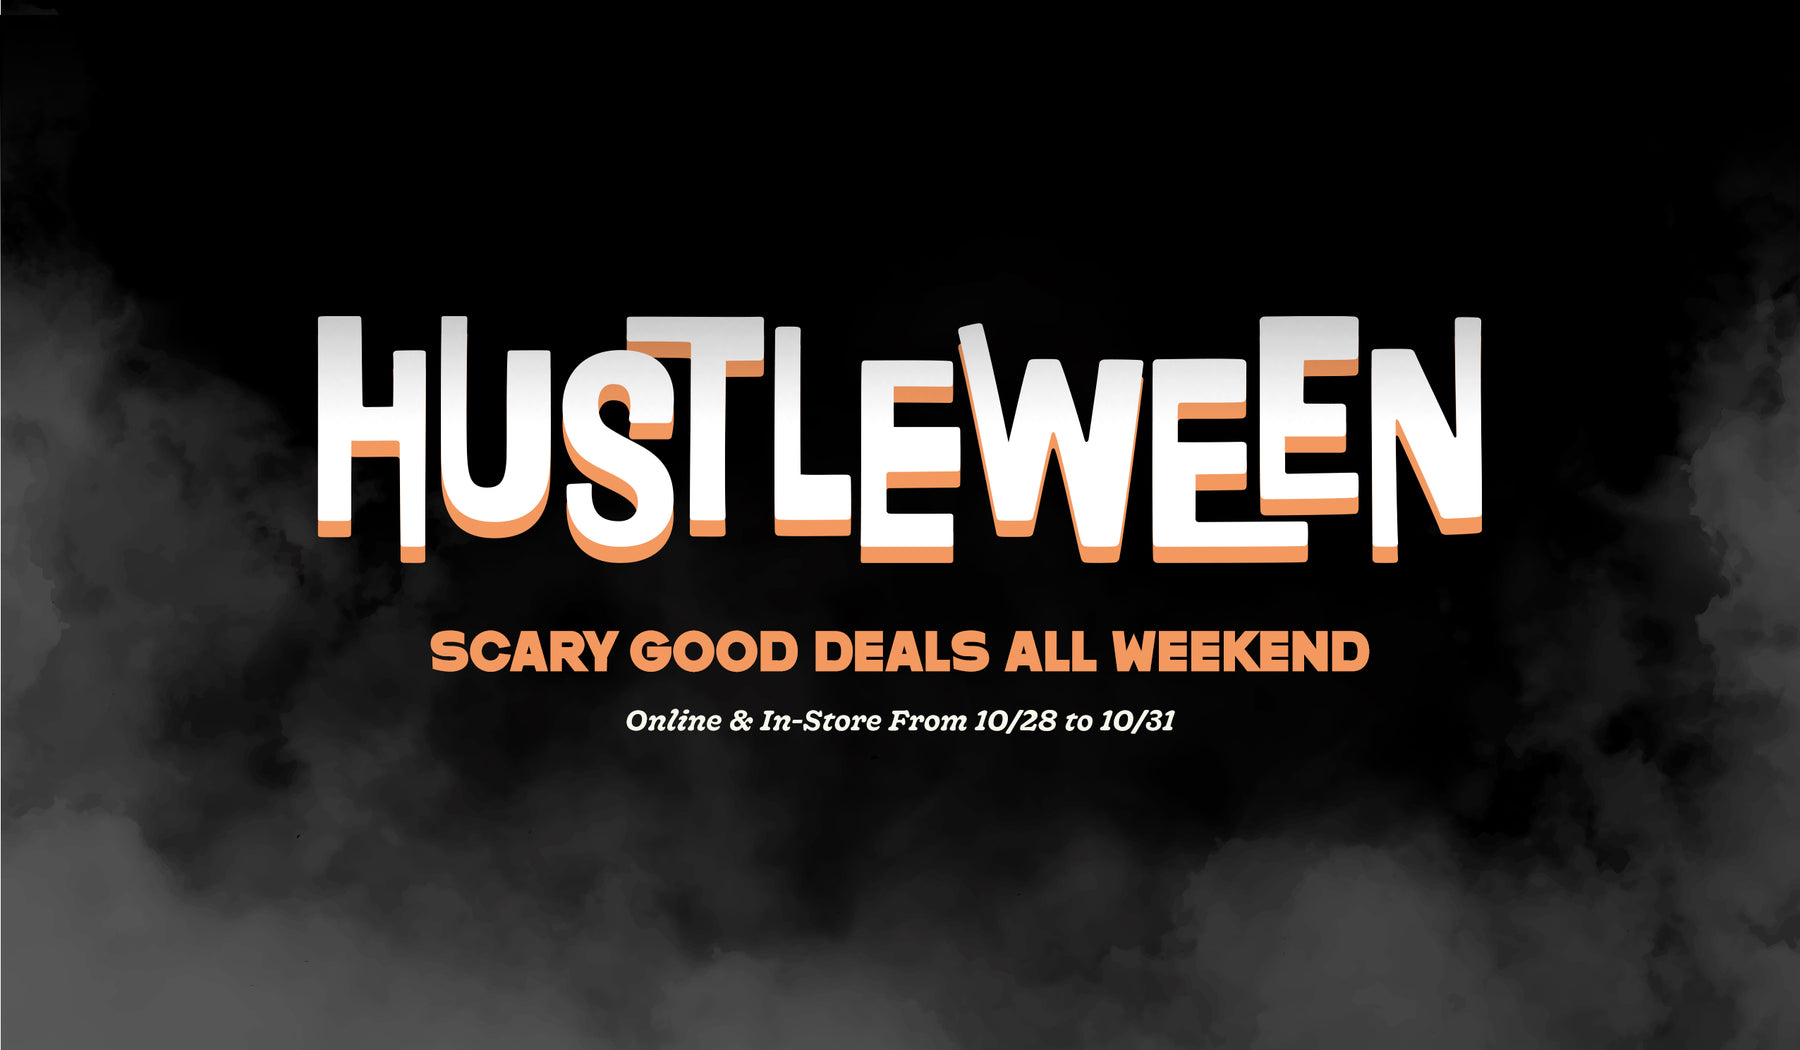 Charlie Hustle's Hustleween Halloween Sale — Scary Good Deals All Weekend